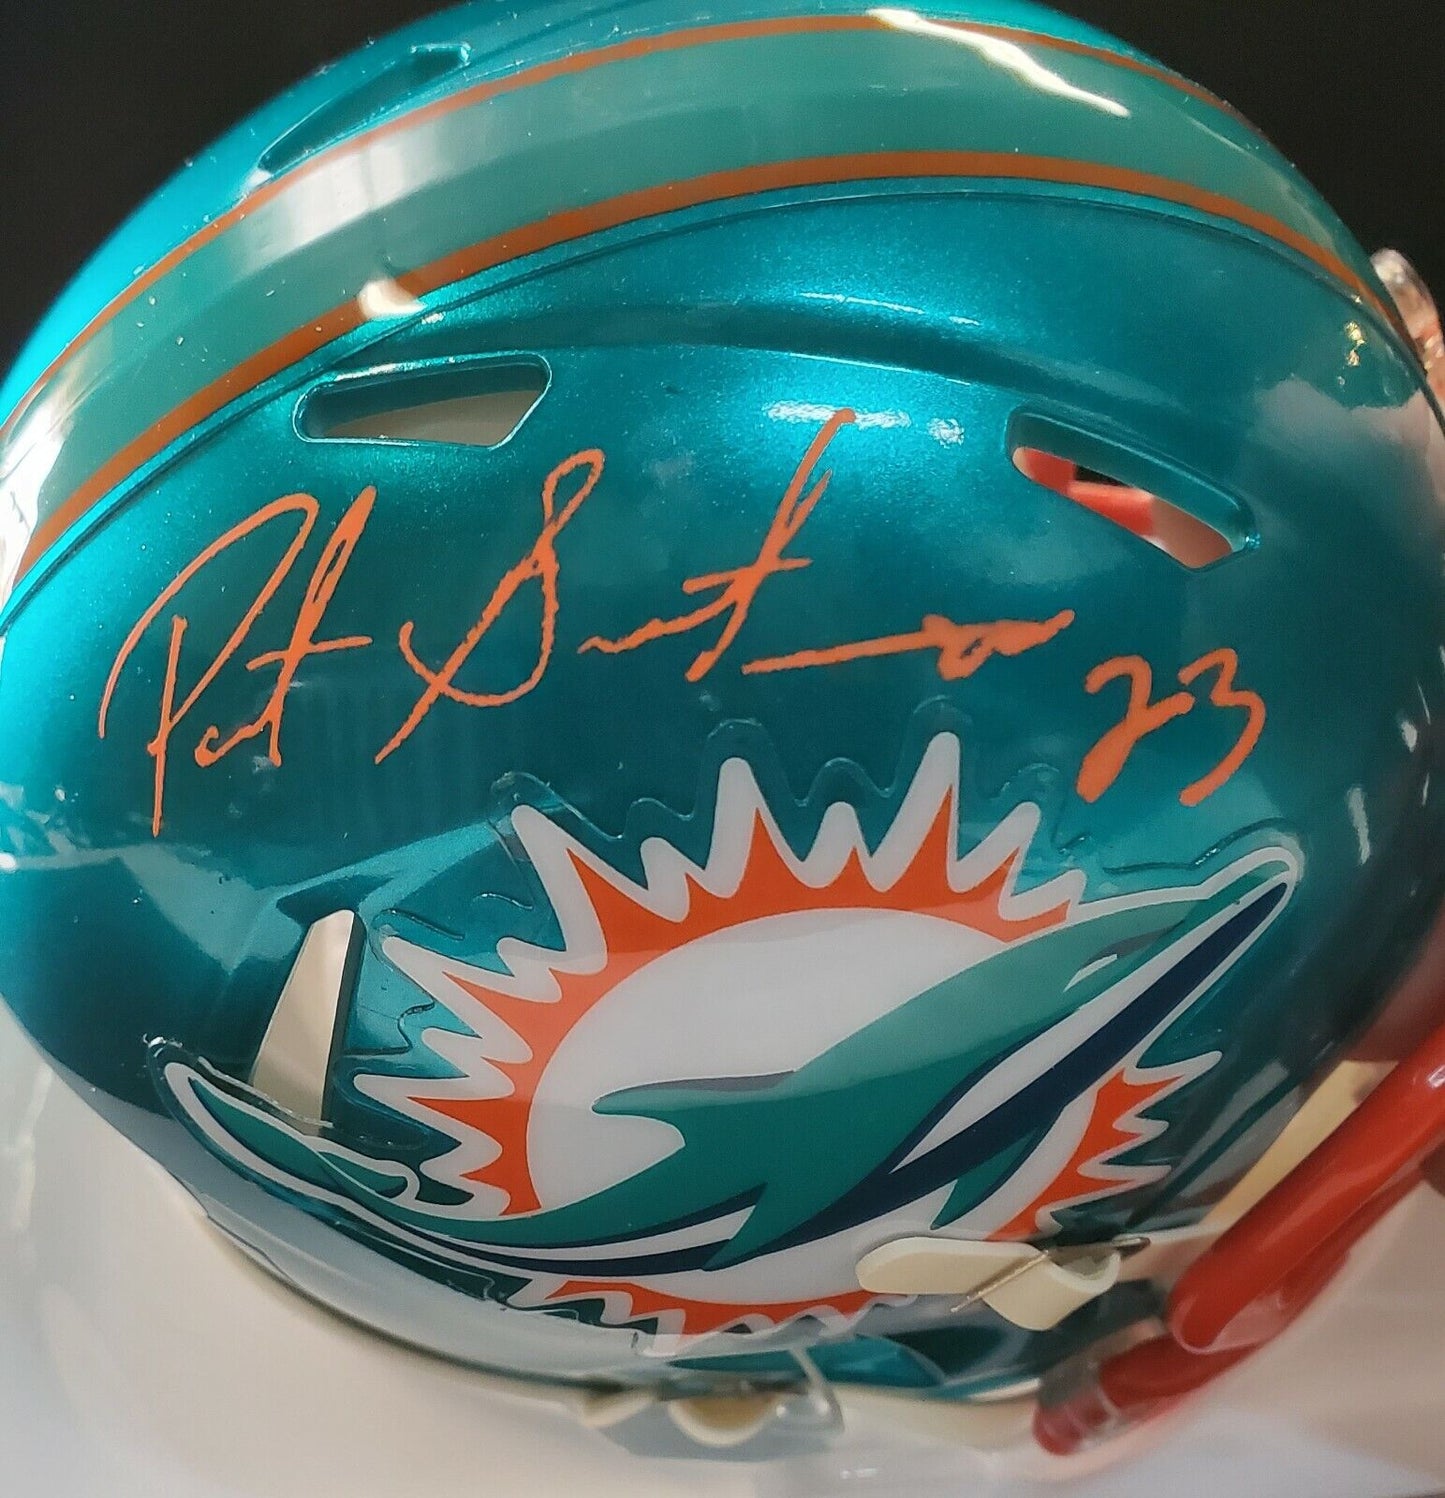 MVP Authentics Patrick Surtain Autographed Signed Miami Dolphins Flash Mini Helmet Jsa Coa 112.50 sports jersey framing , jersey framing